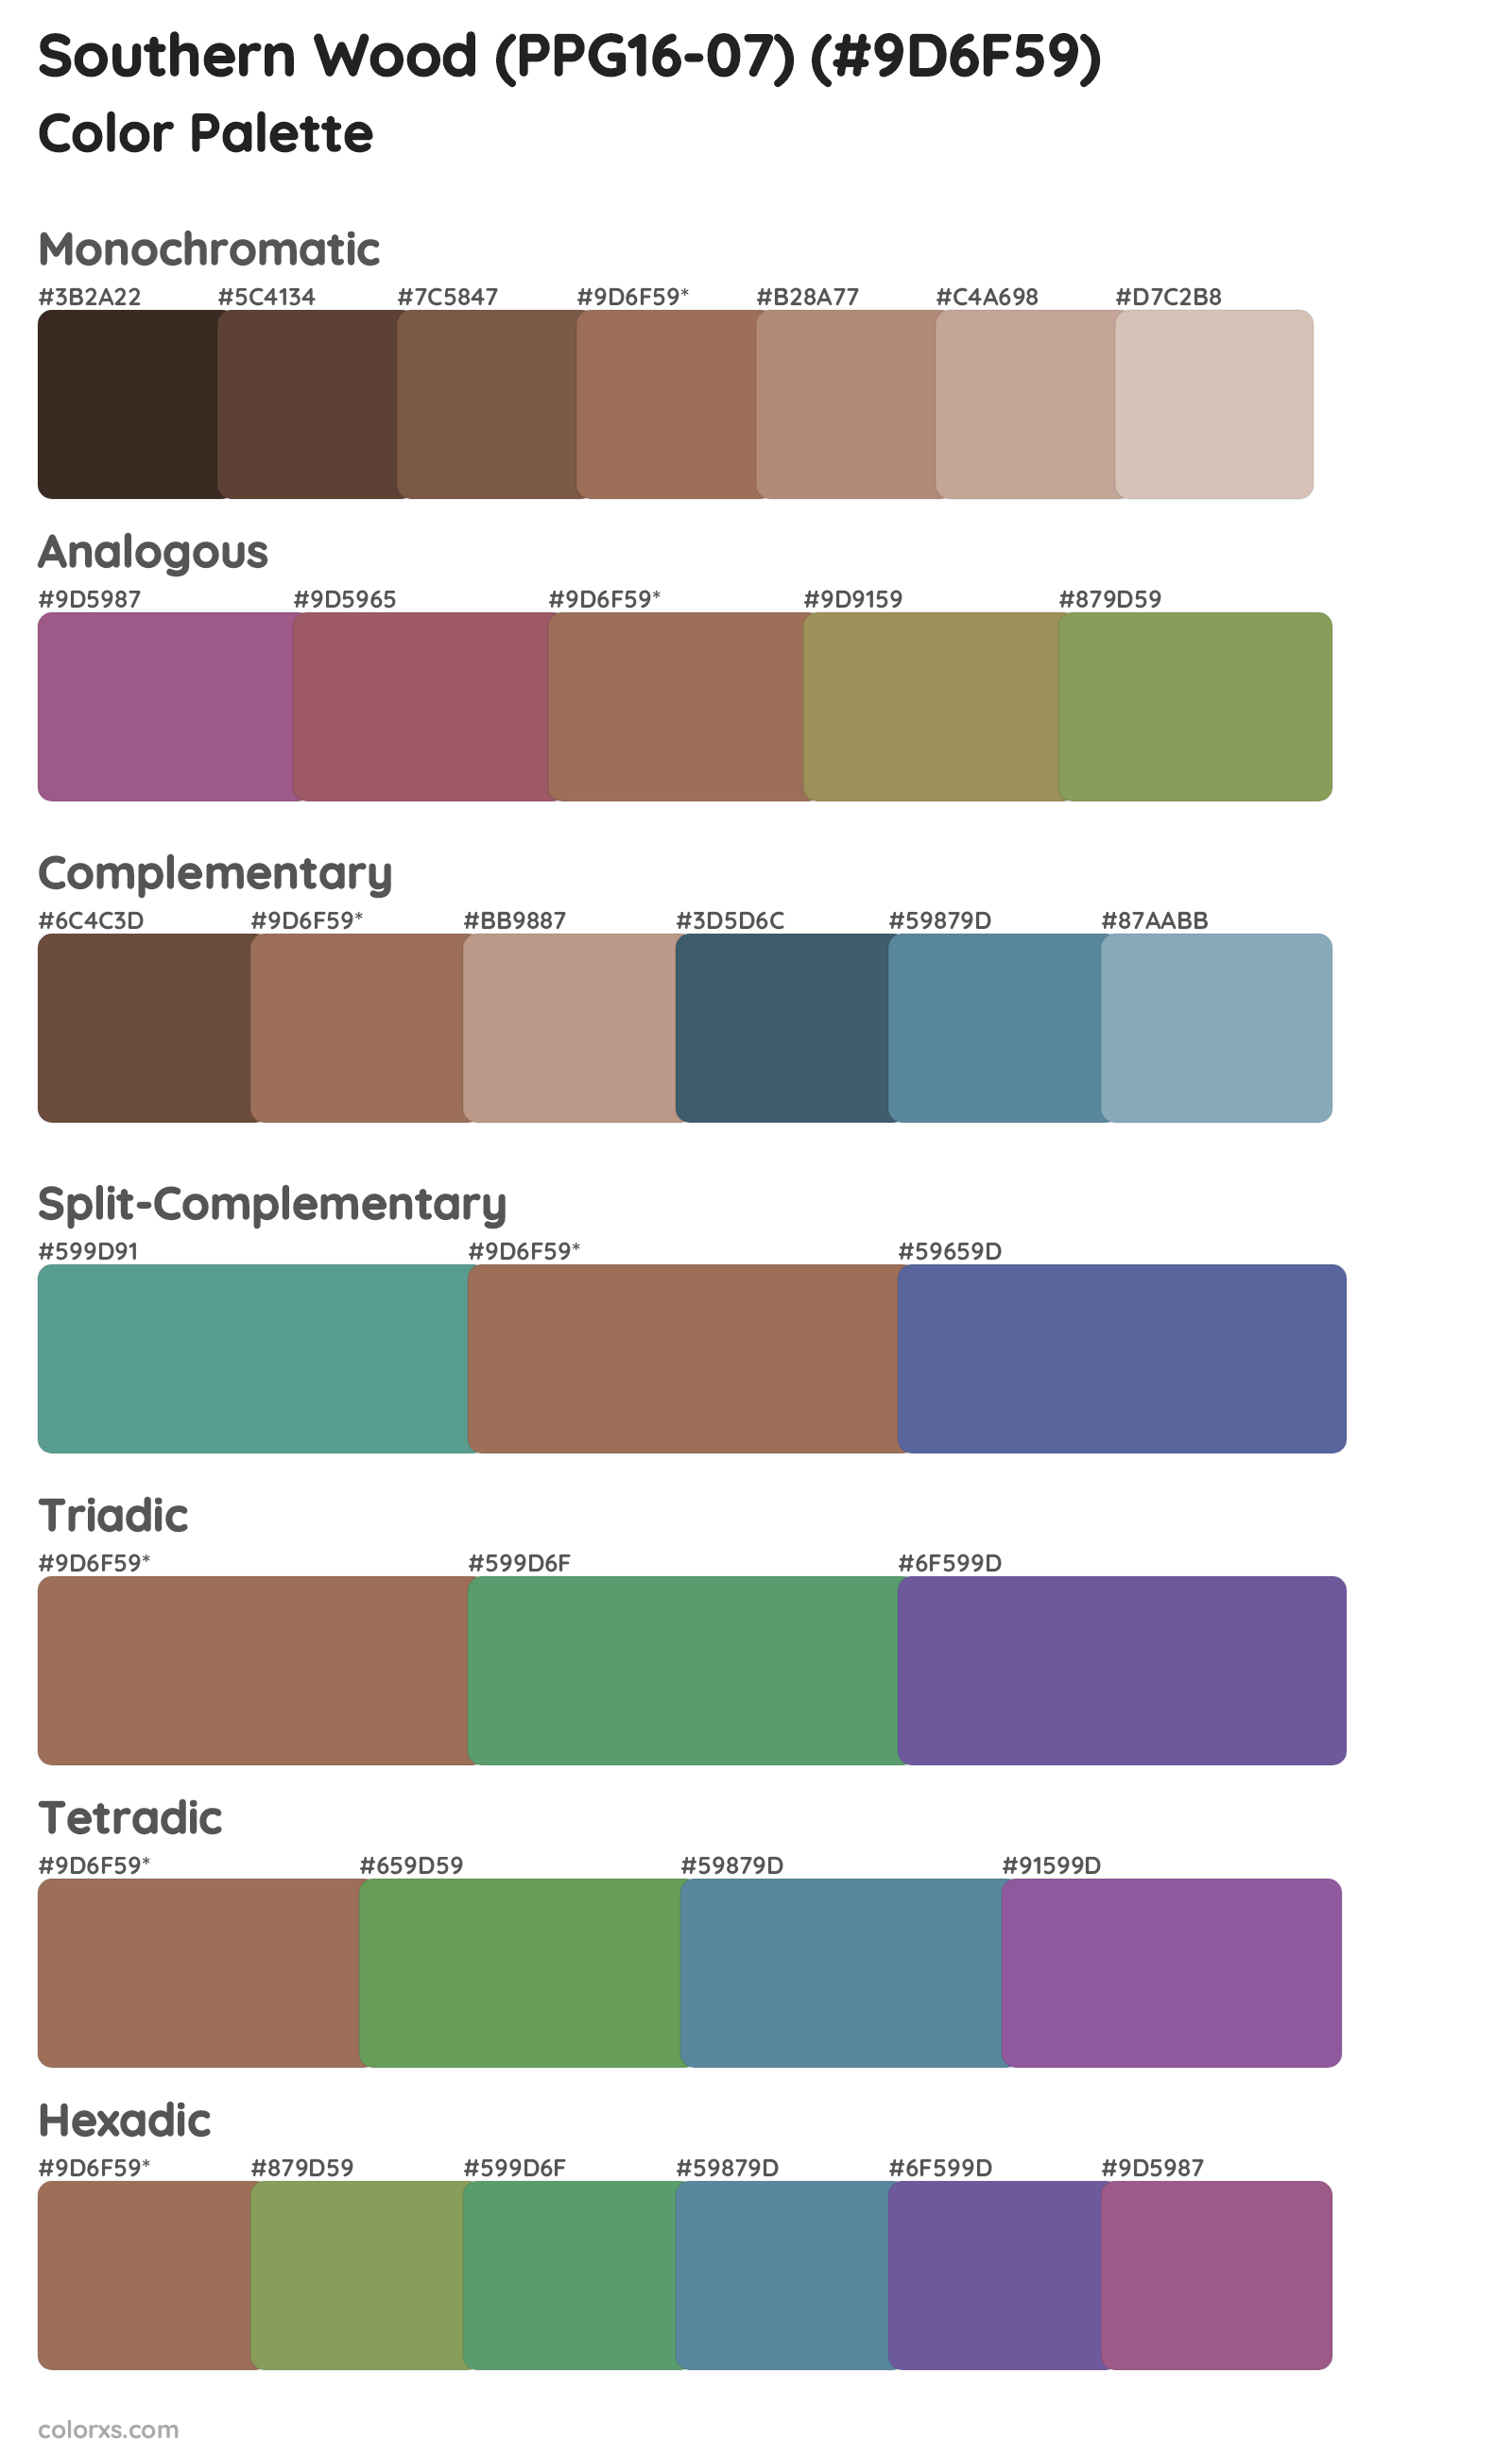 Southern Wood (PPG16-07) Color Scheme Palettes